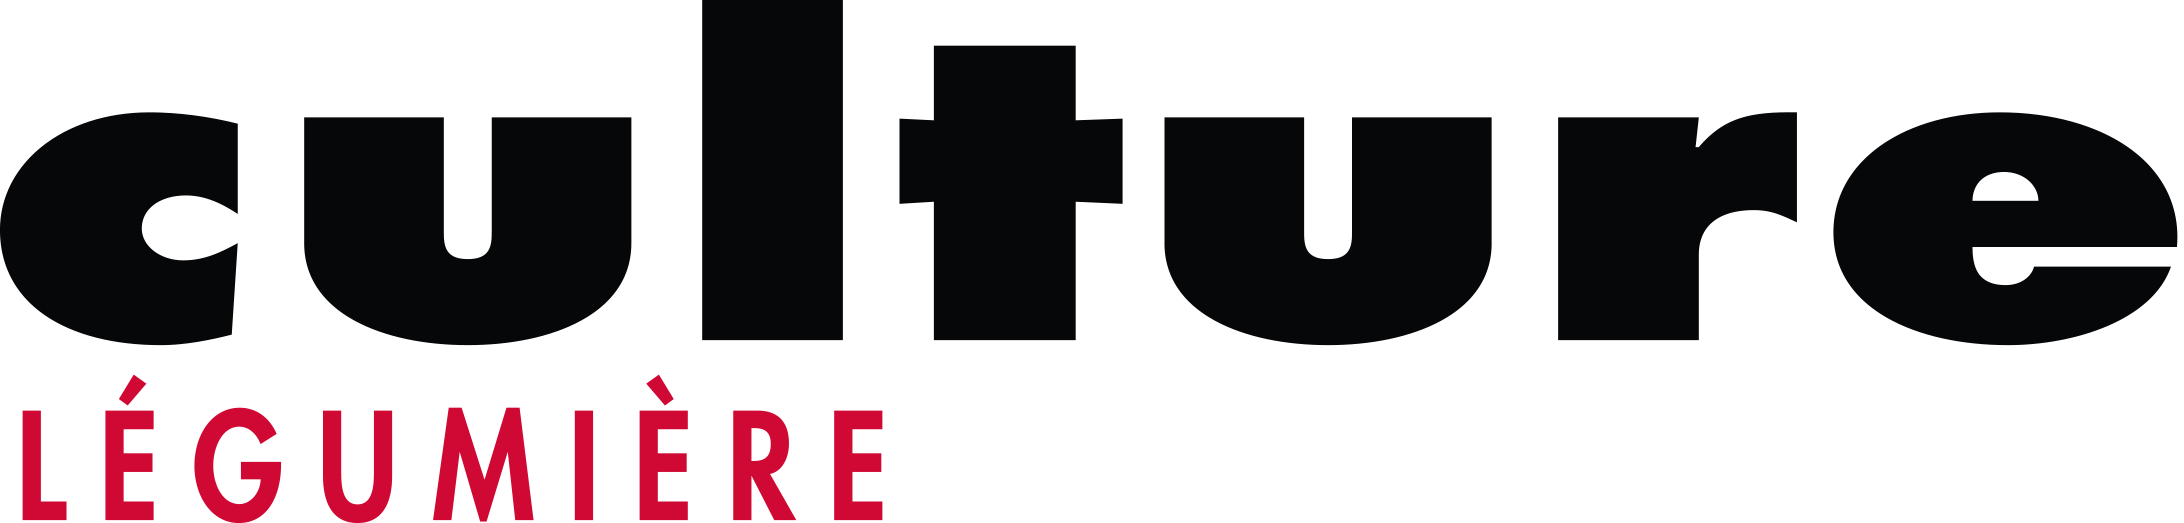 Culture_legumiere_Logo